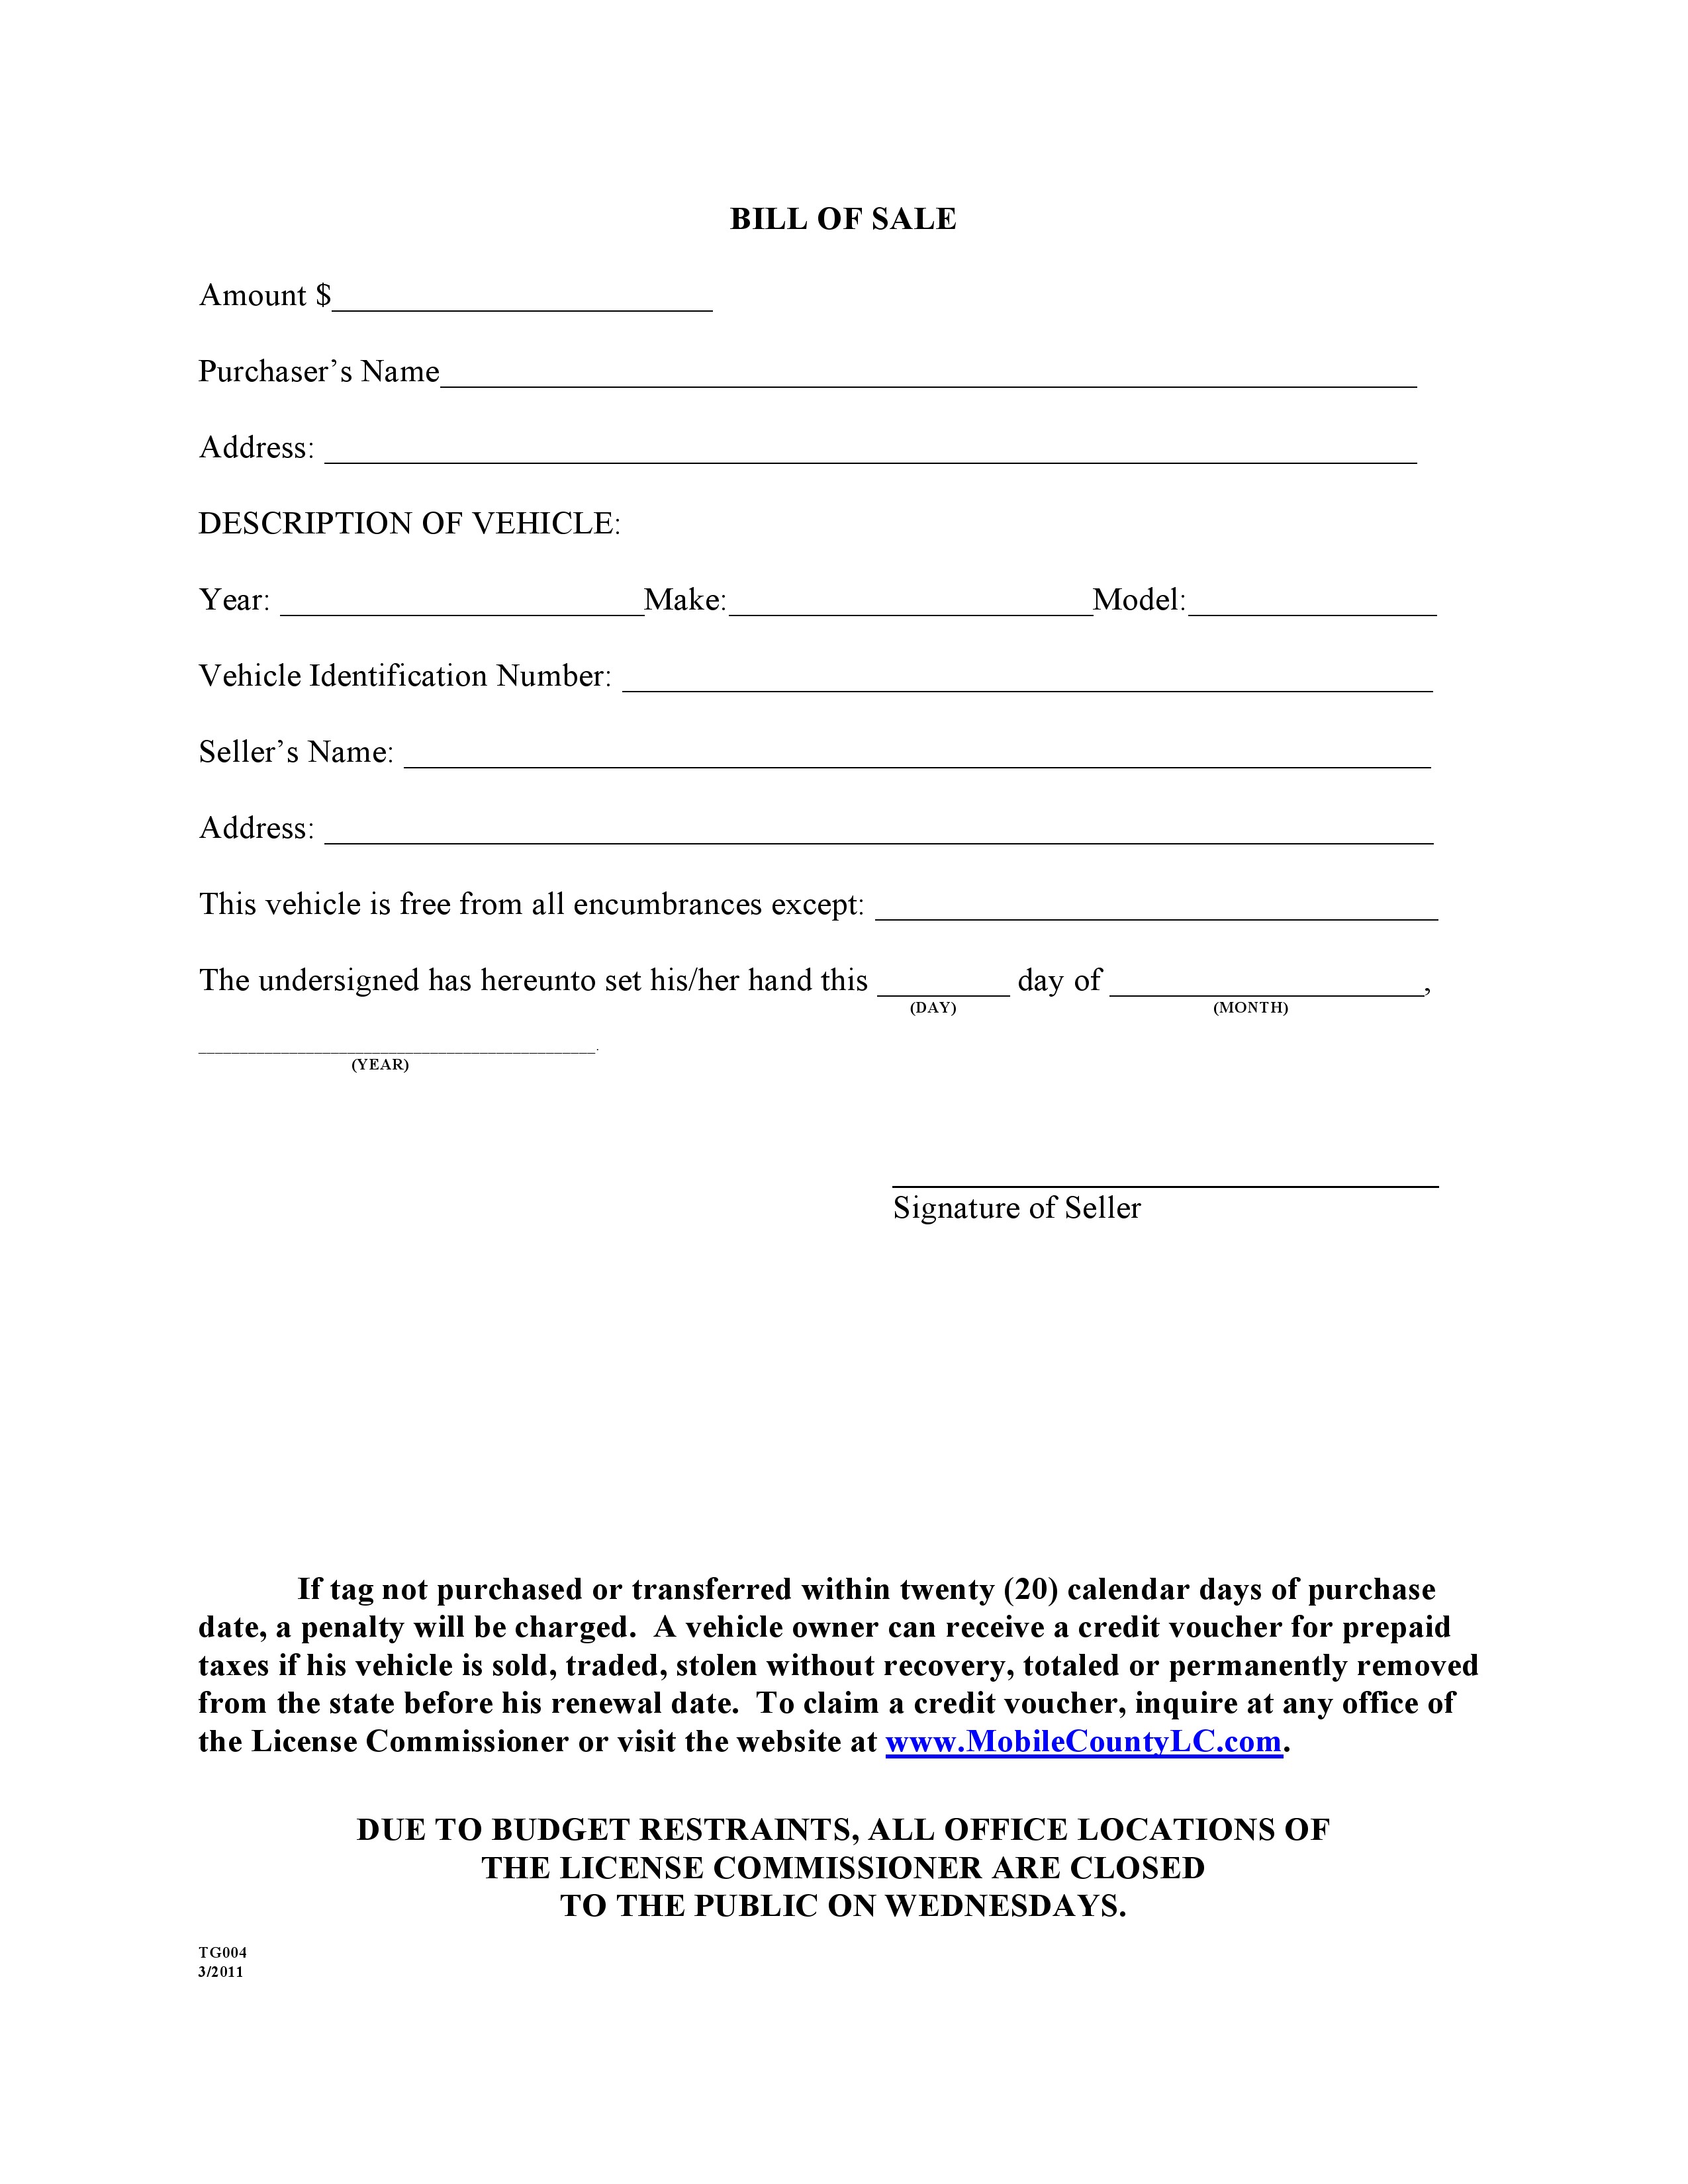 Mobile County, Alabama Bill of Sale Form